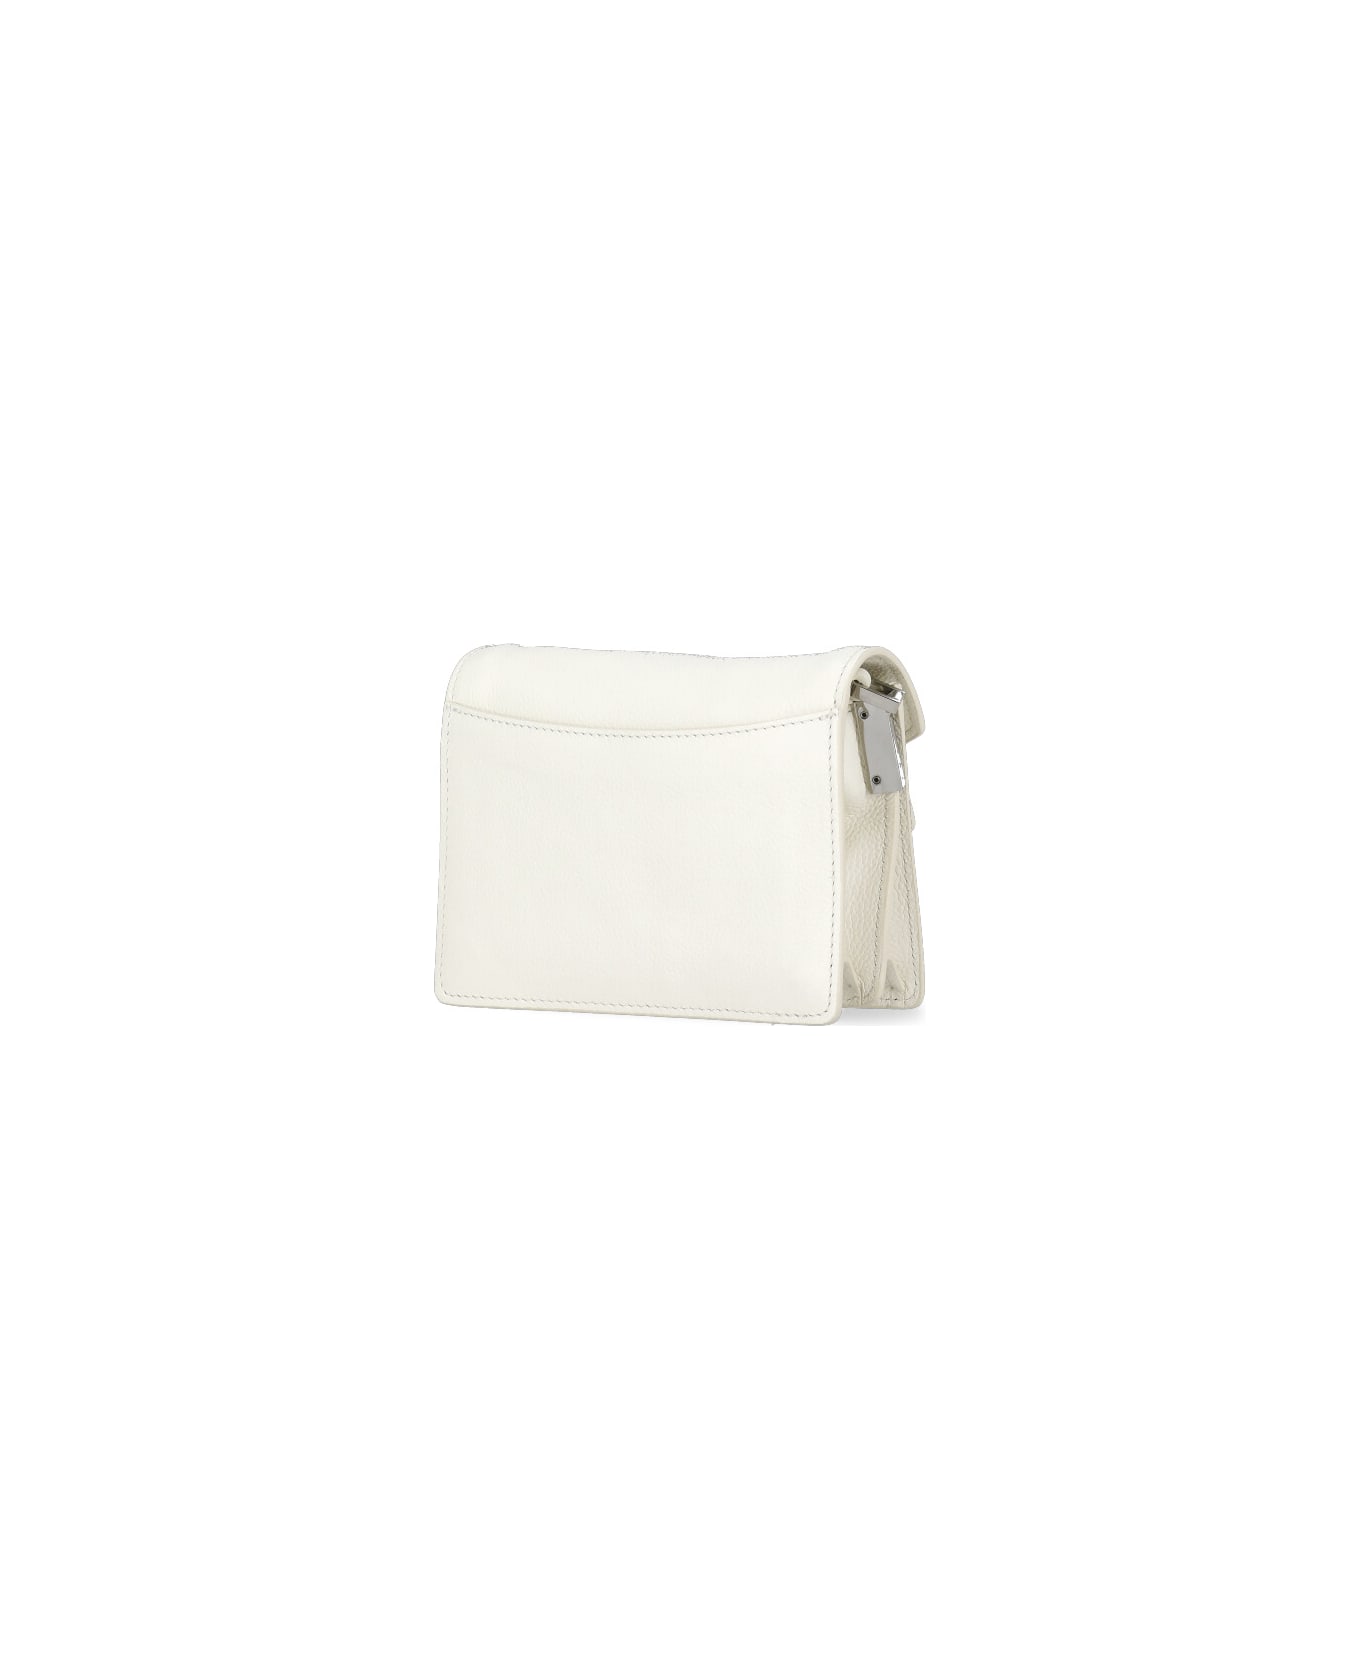 Marni Bag With Logo - Ivory